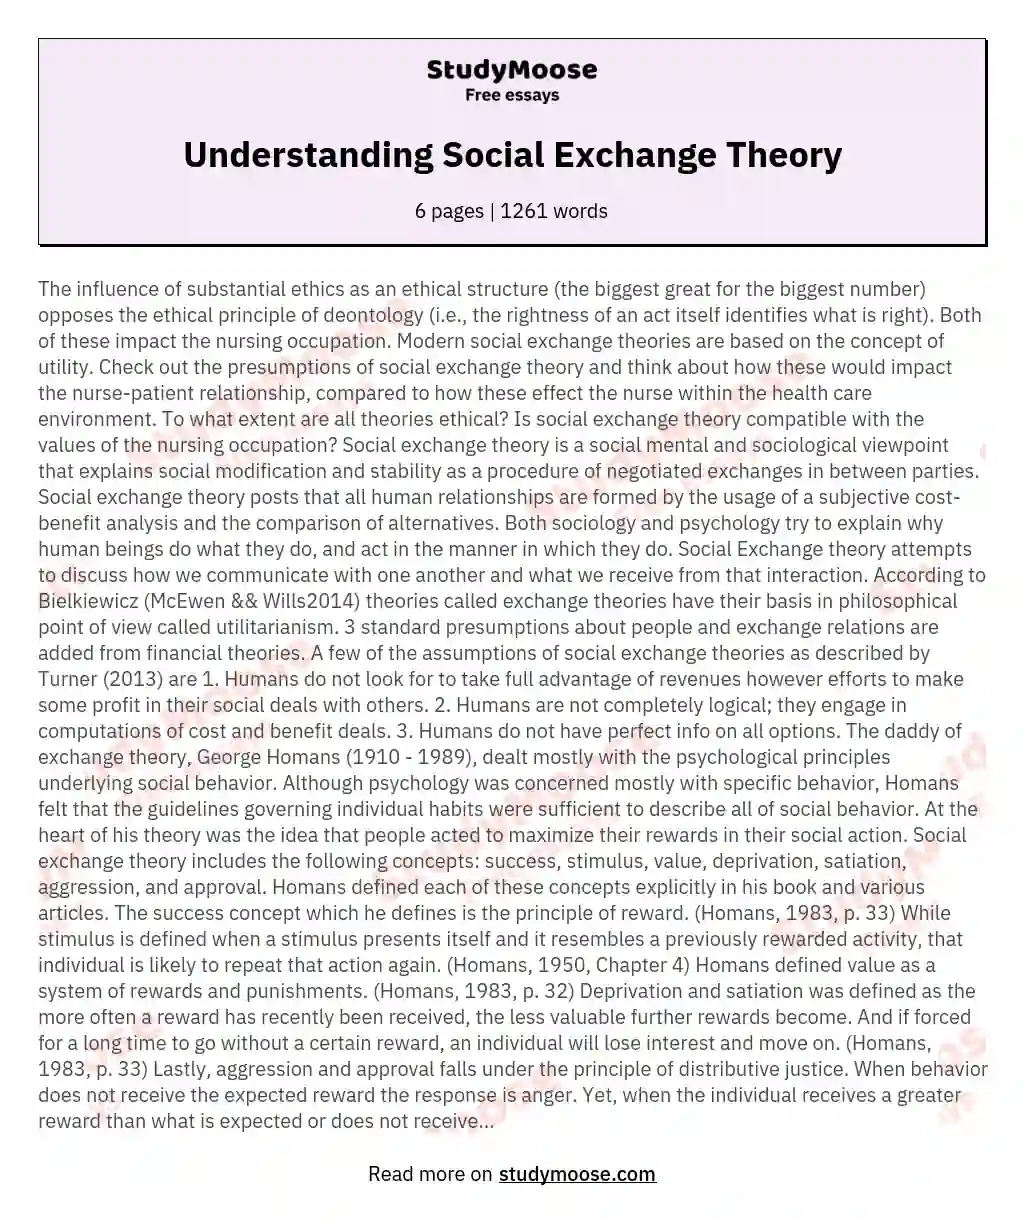 Understanding Social Exchange Theory essay